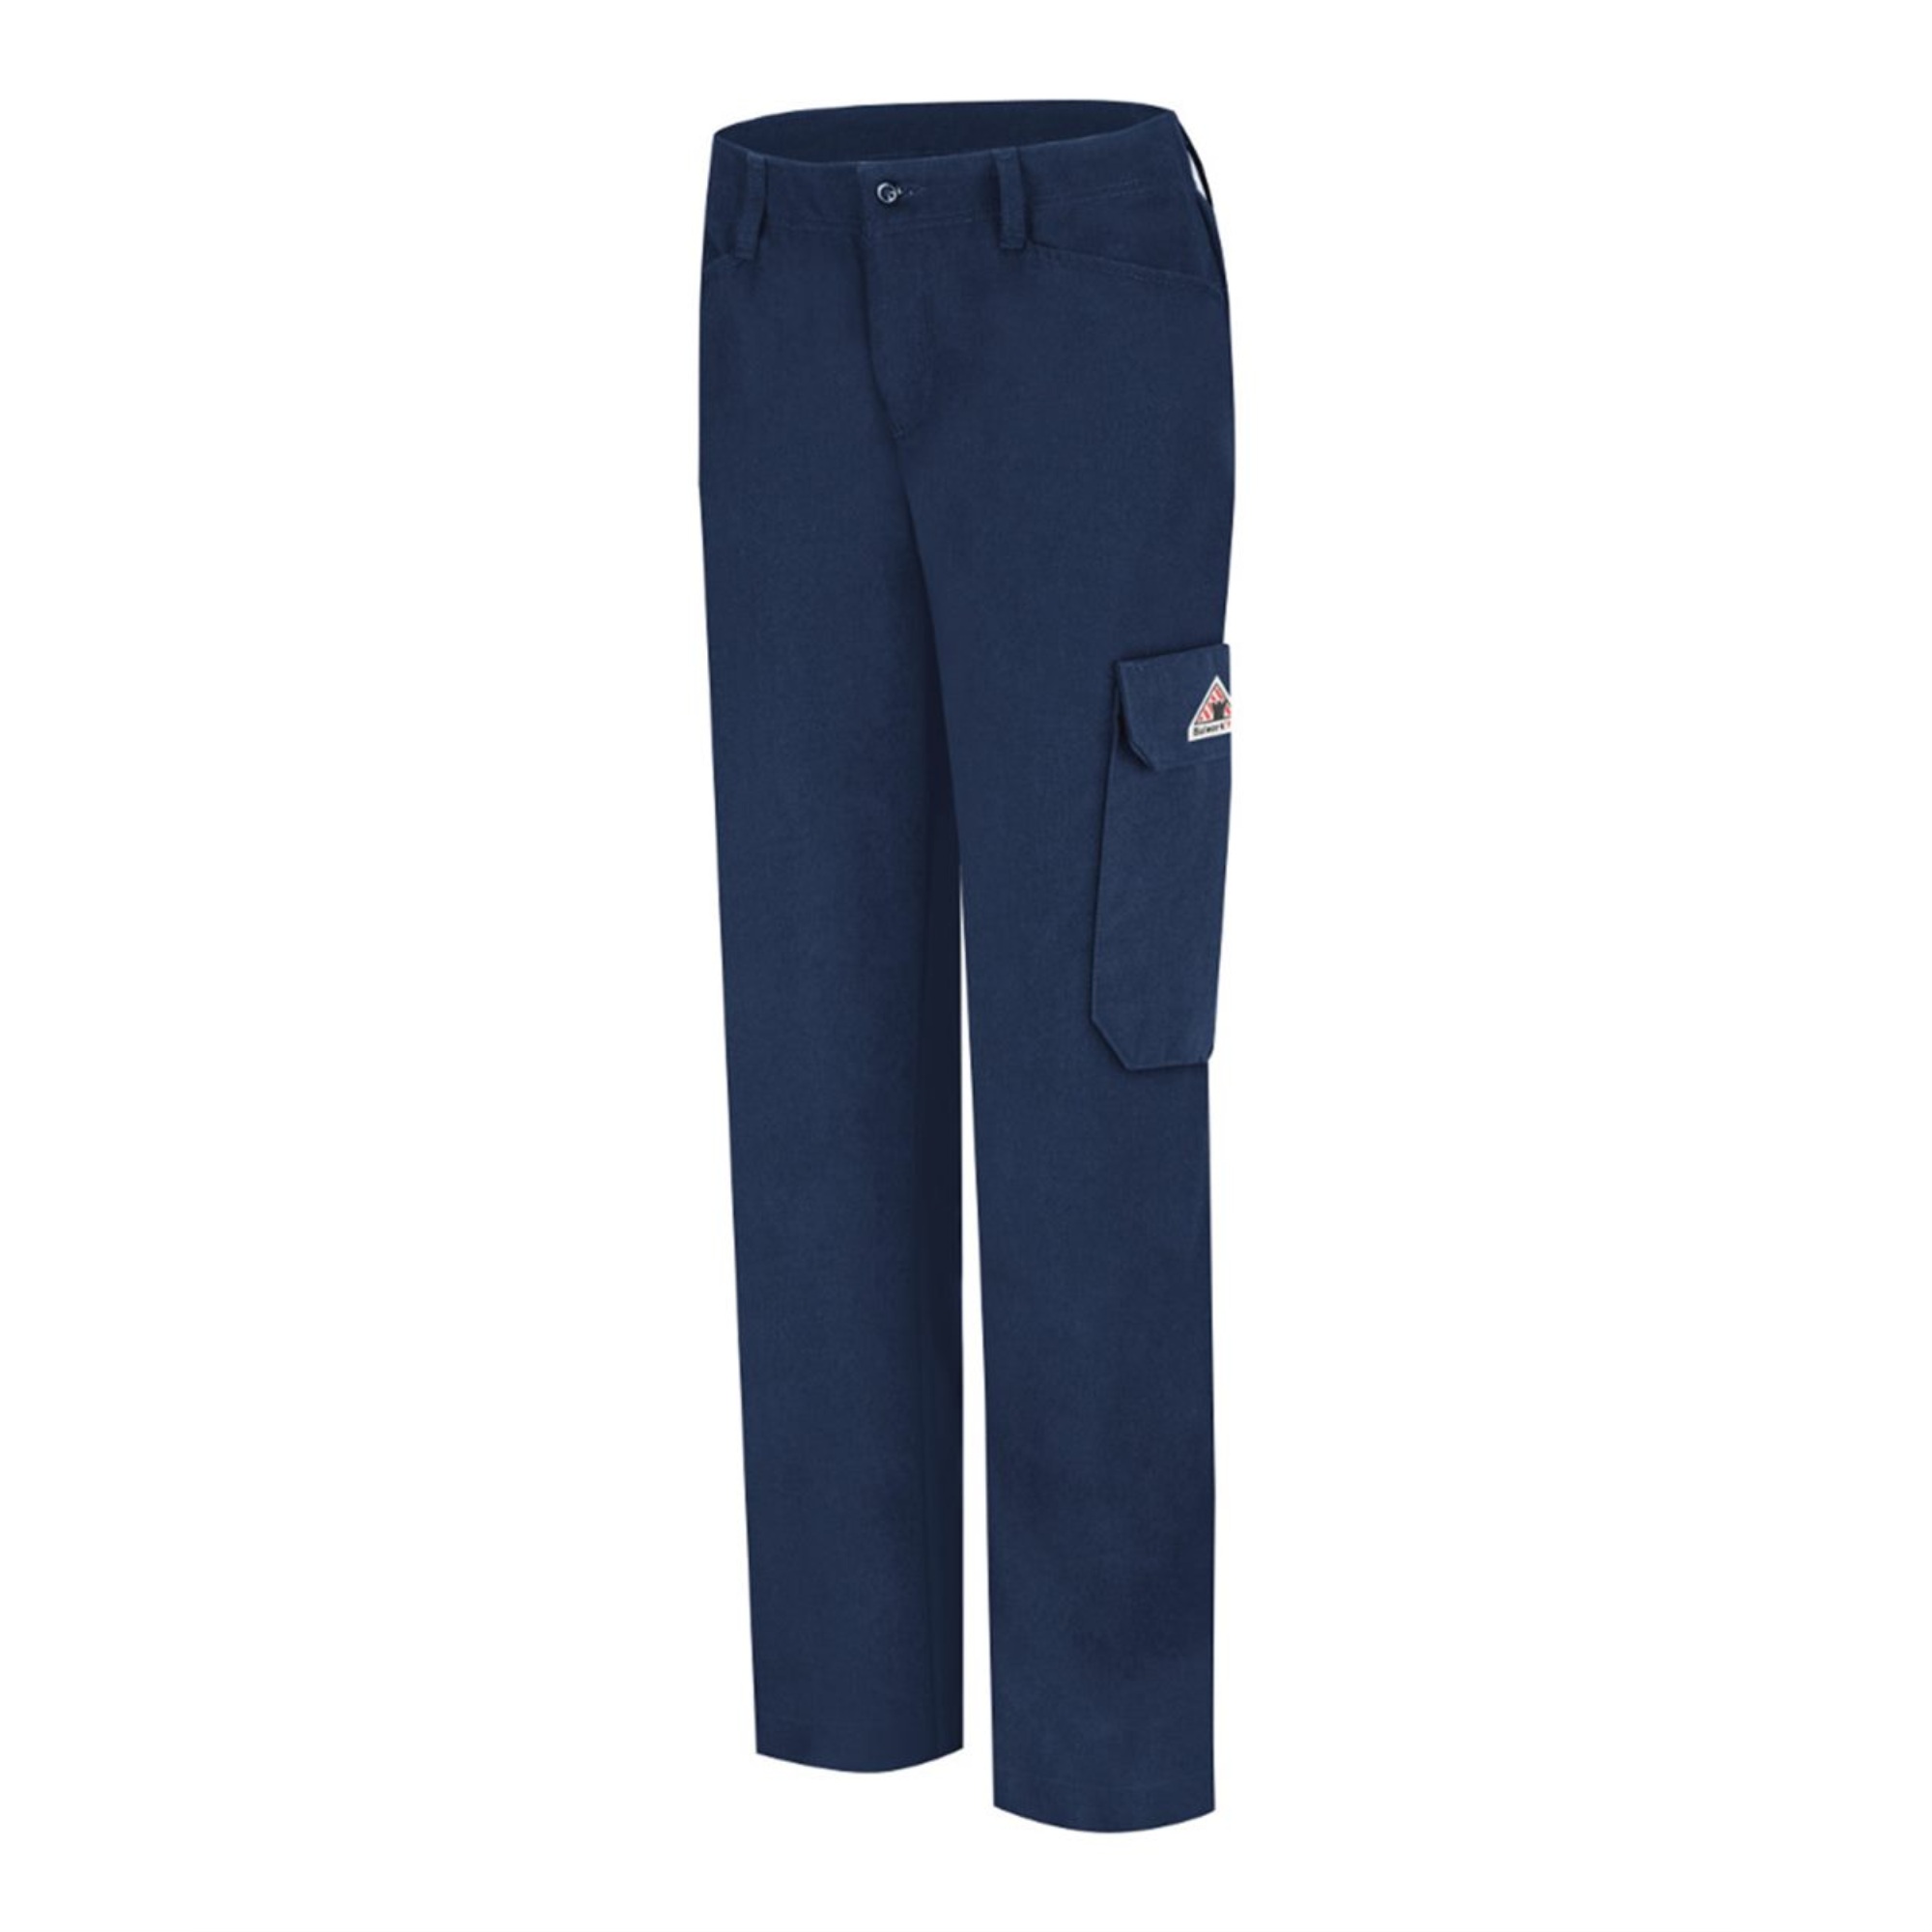 Bulwark Women's Cargo Pocket Pants - Cool Touch 2 - 20 / Navy - 34 Unhemmed